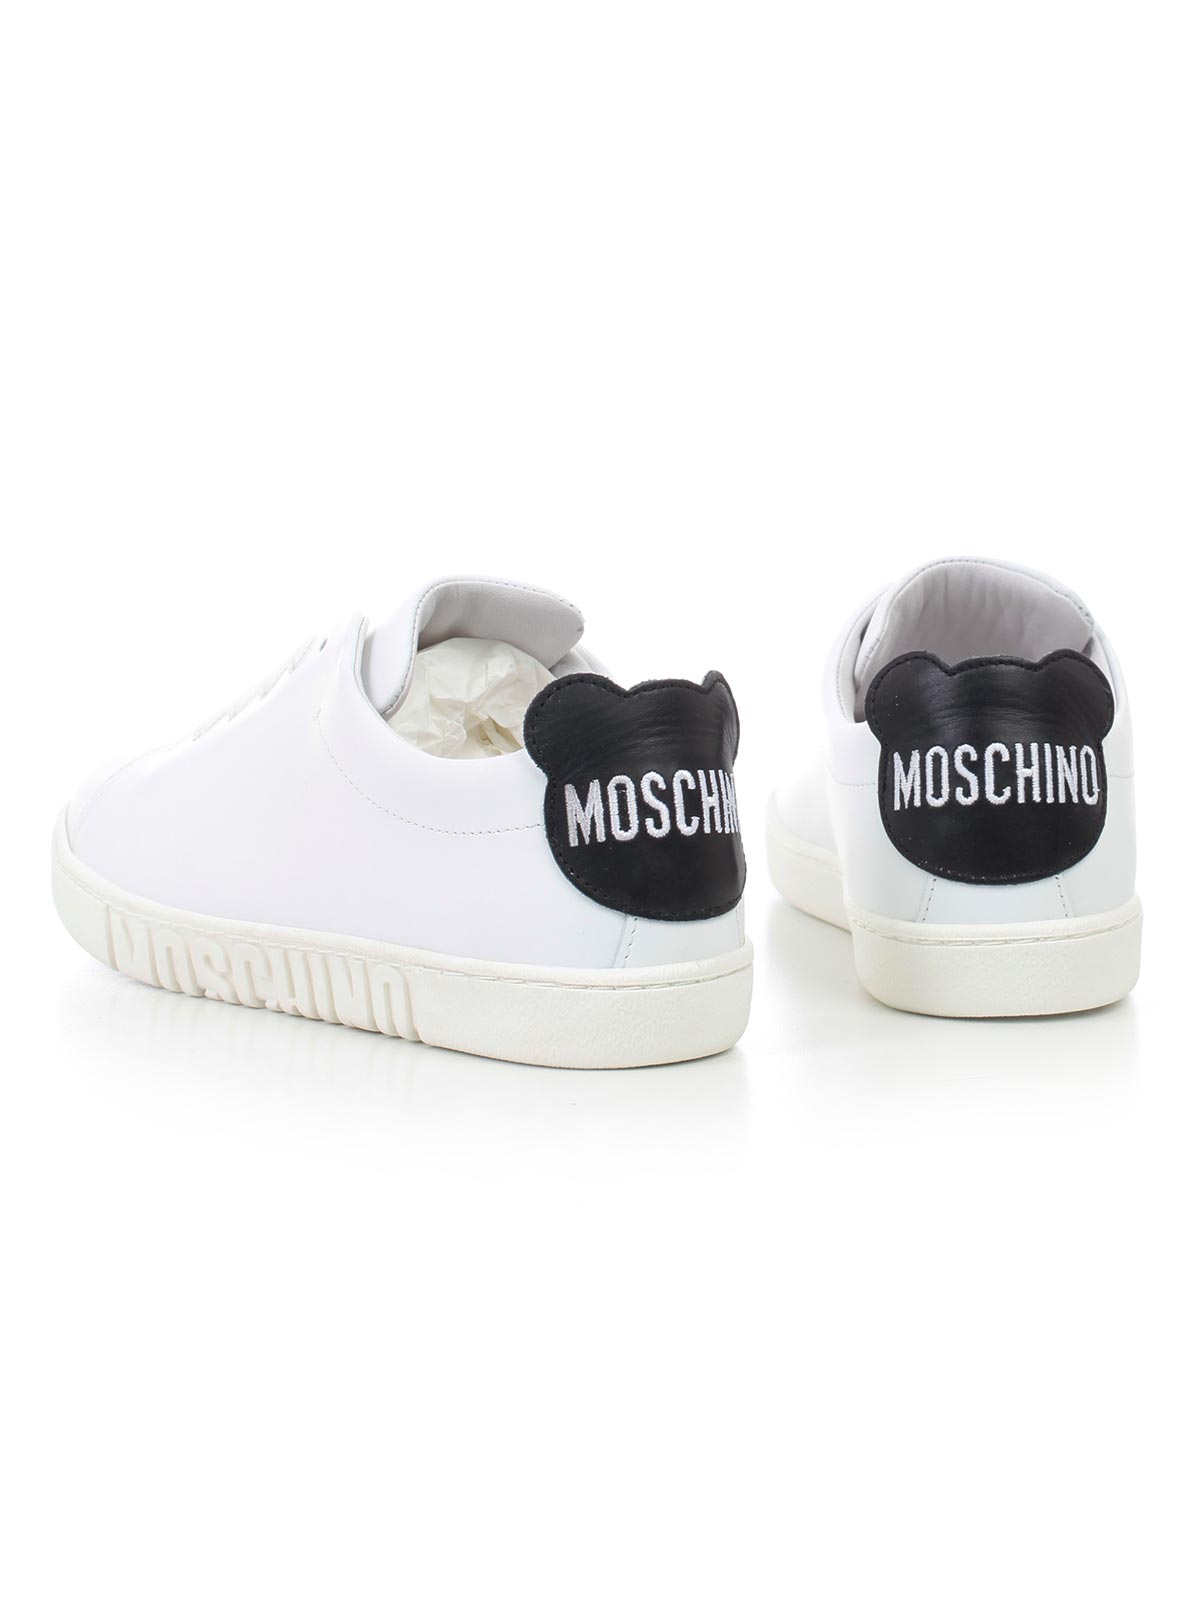 moschino shoes